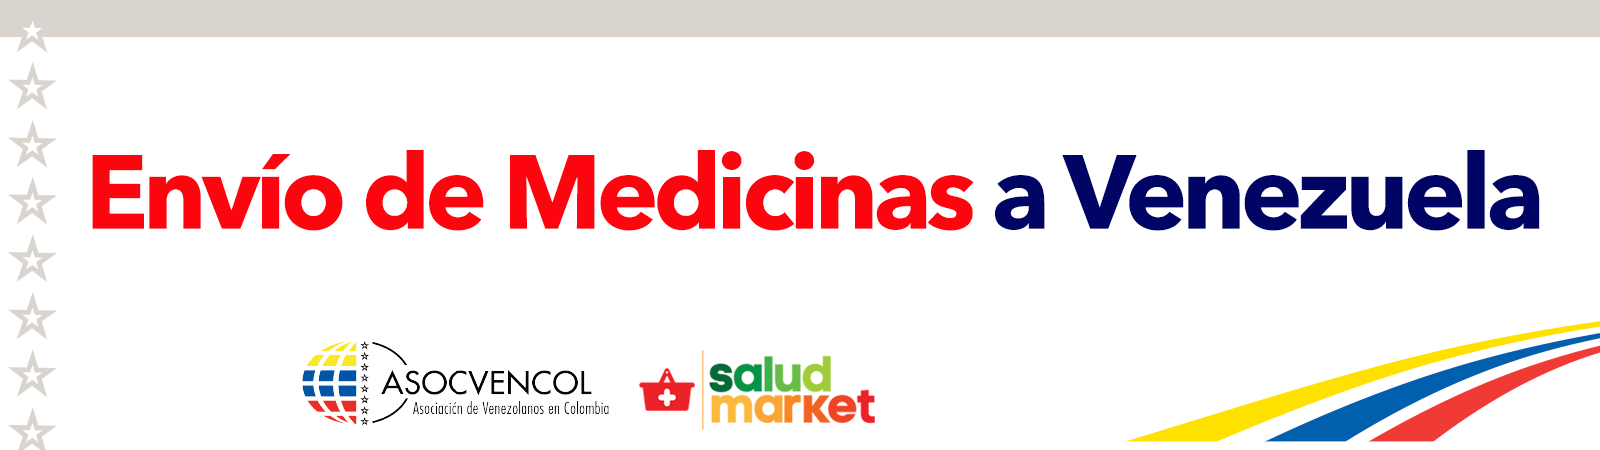 Envío de Medicamentos a Venezuela